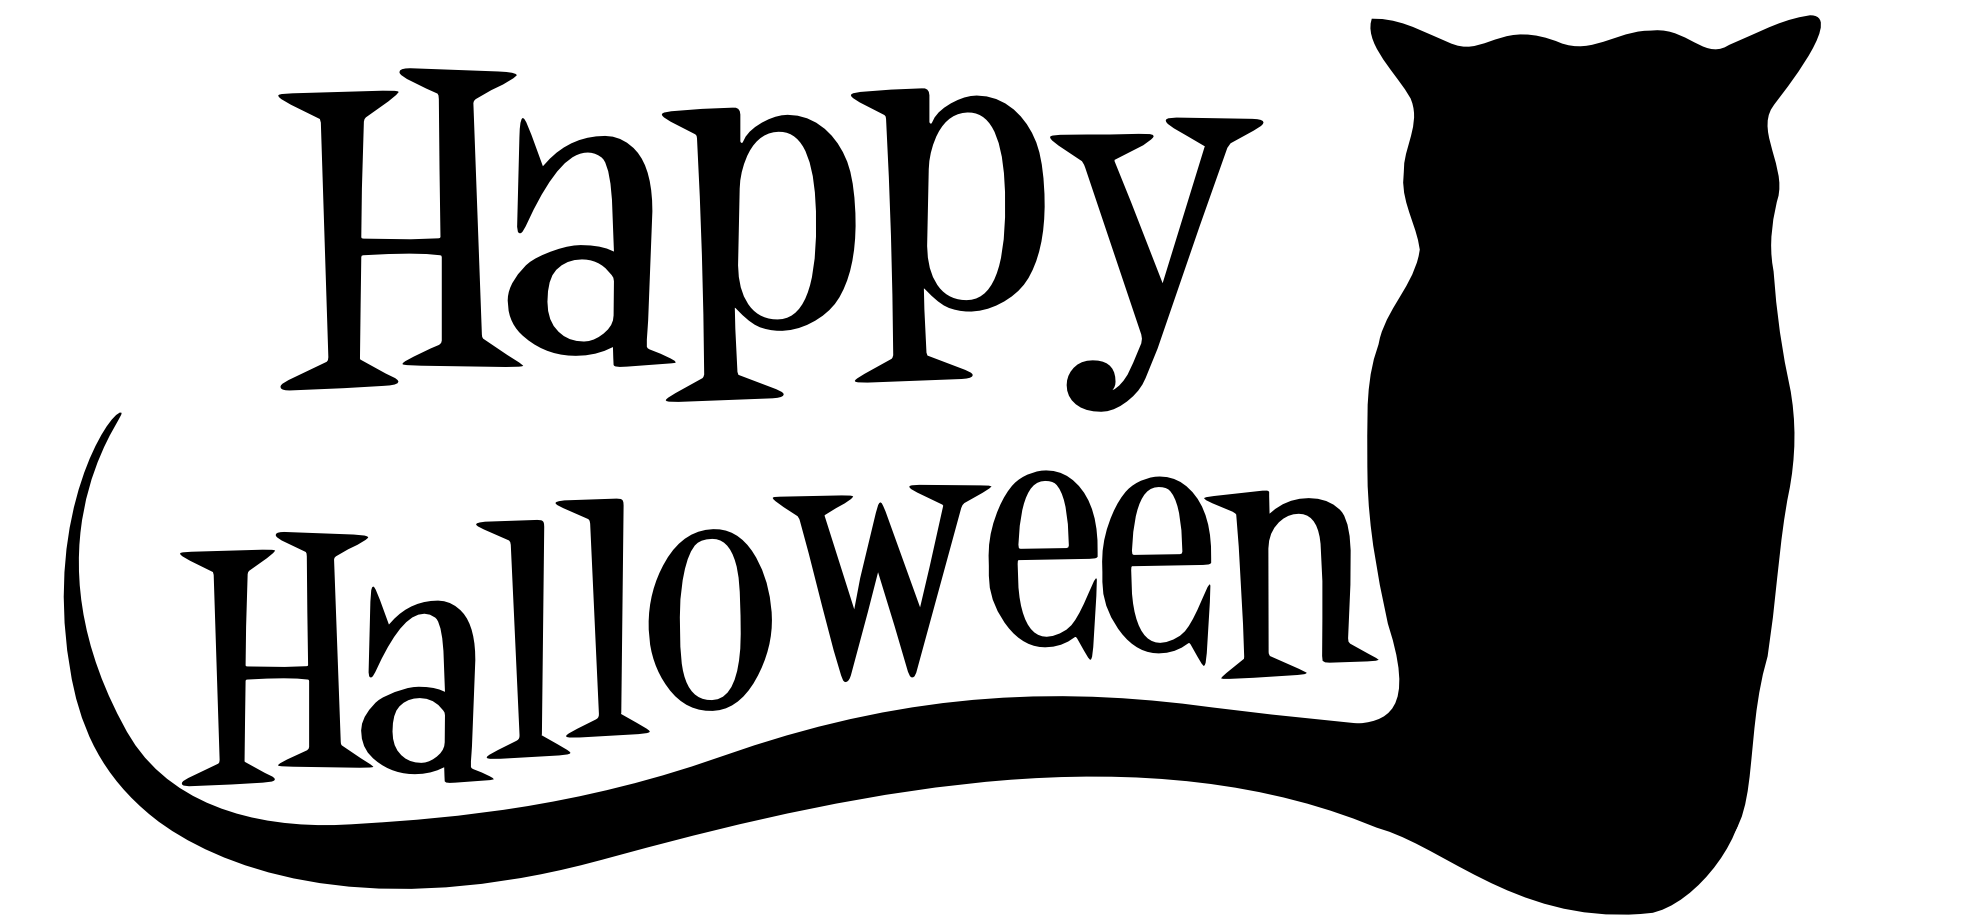 Halloween Black and White Logo - Black and white happy halloween jpg royalty free stock